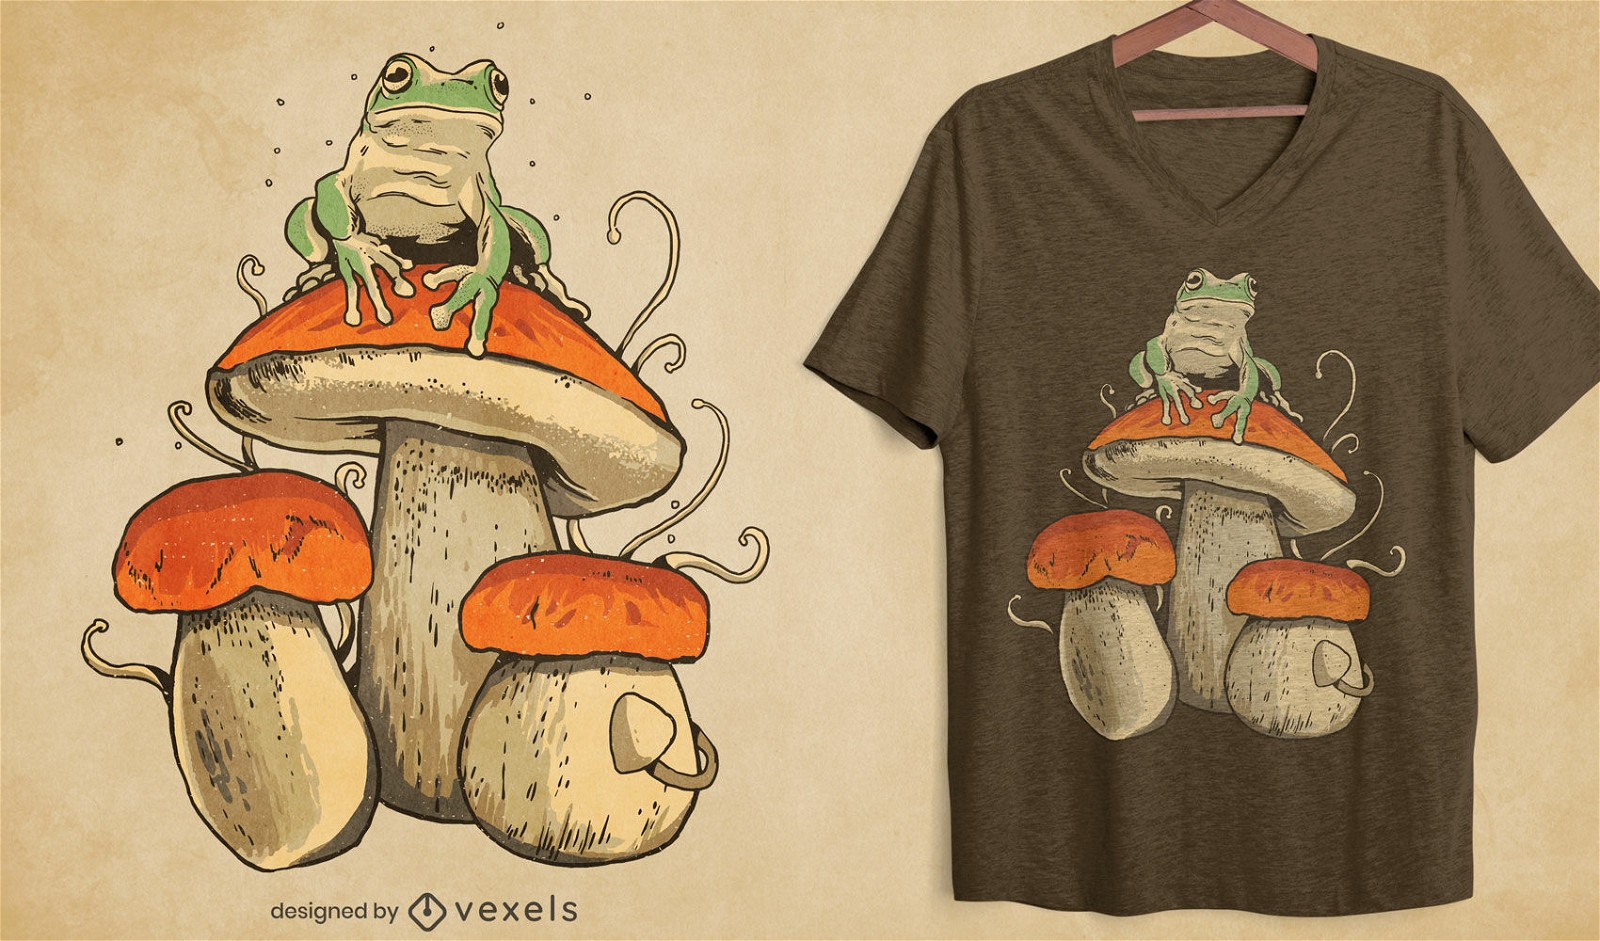 Frog on mushroom t-shirt design